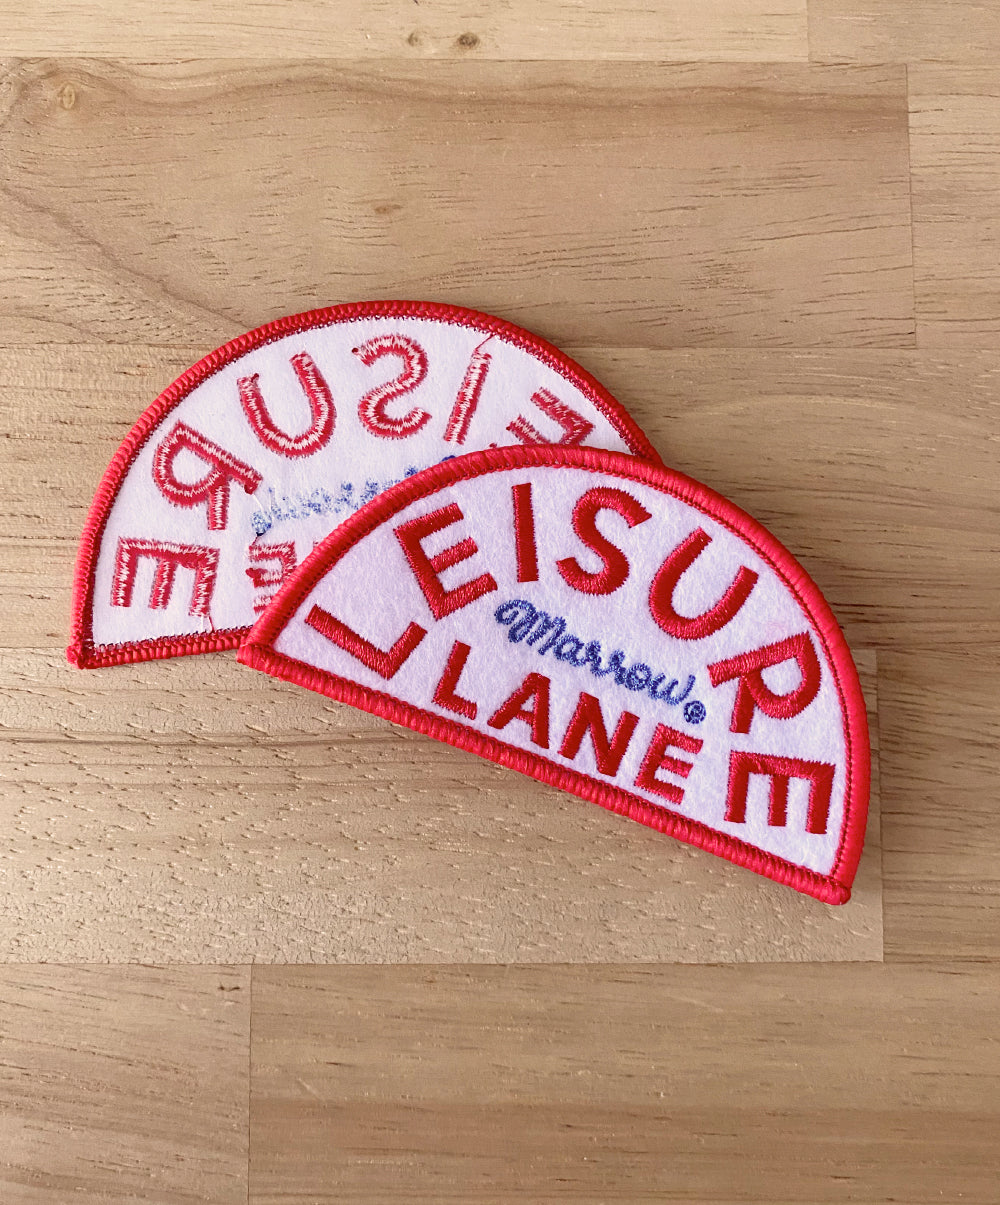 Leisure Lane iron-on patch